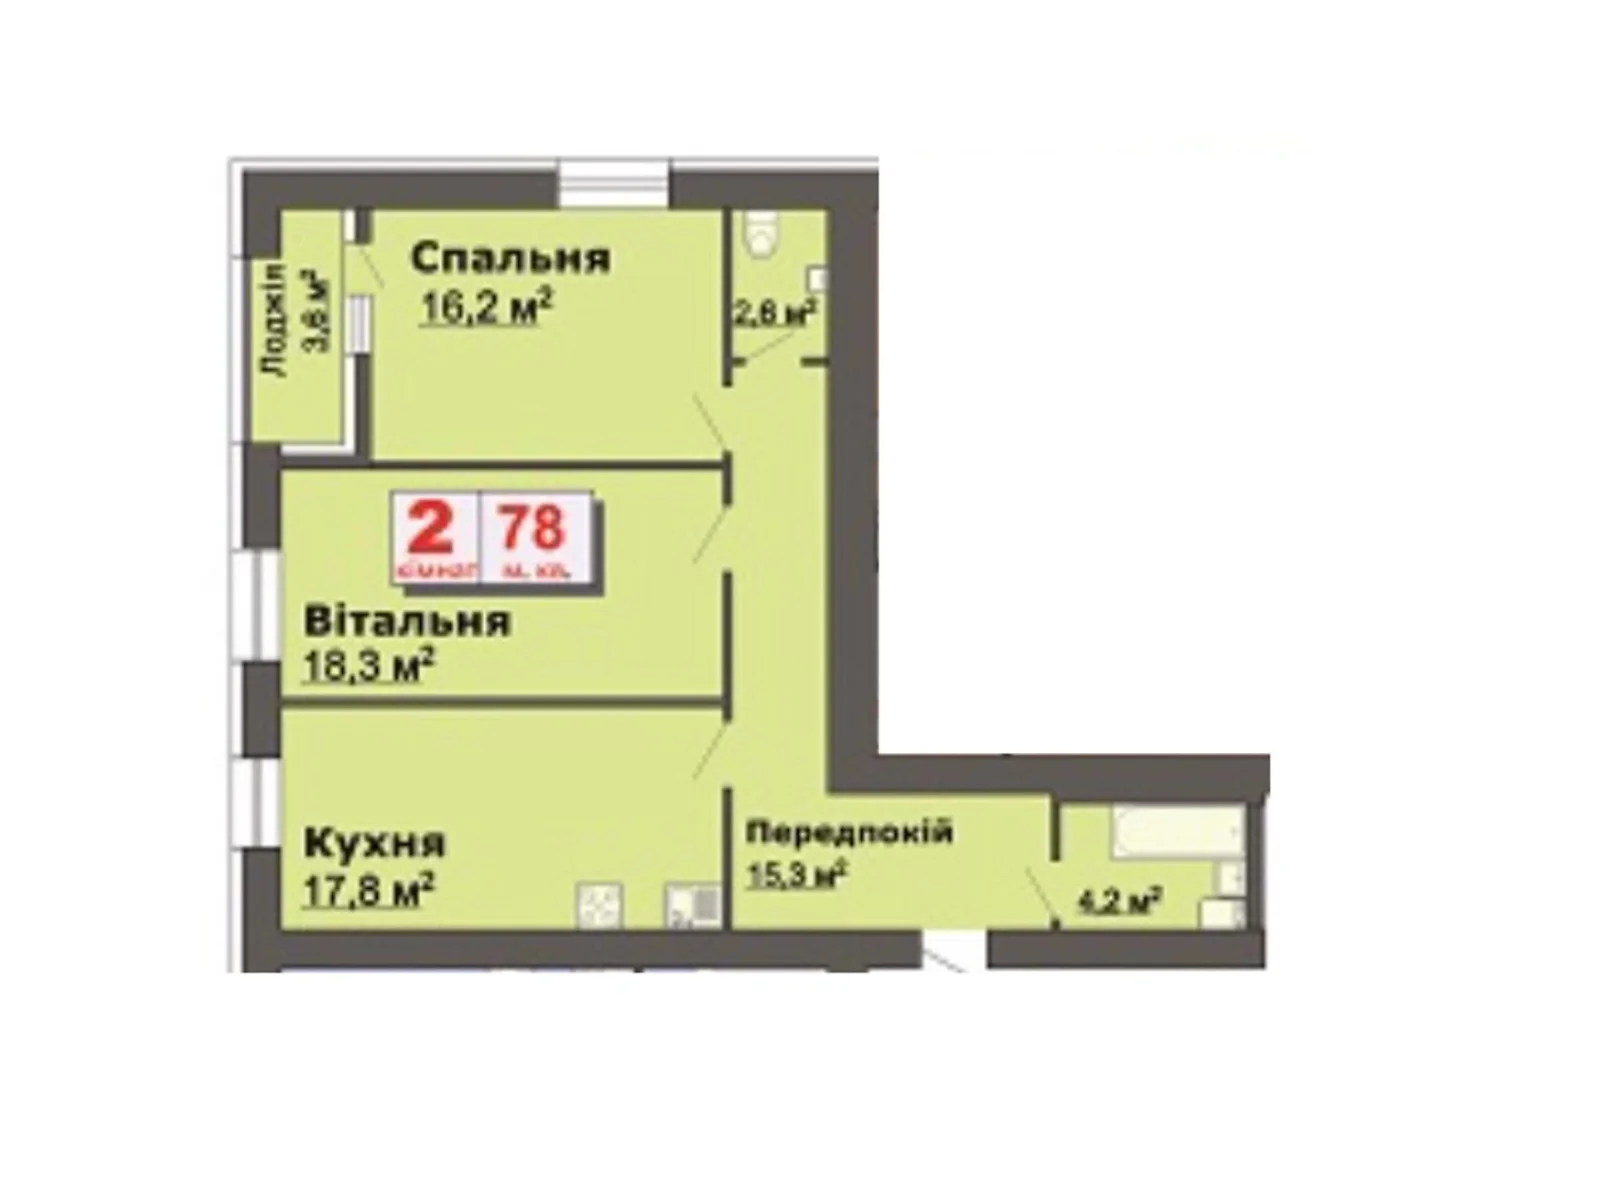 Продается 2-комнатная квартира 78 кв. м в Змиенце, цена: 66585 $